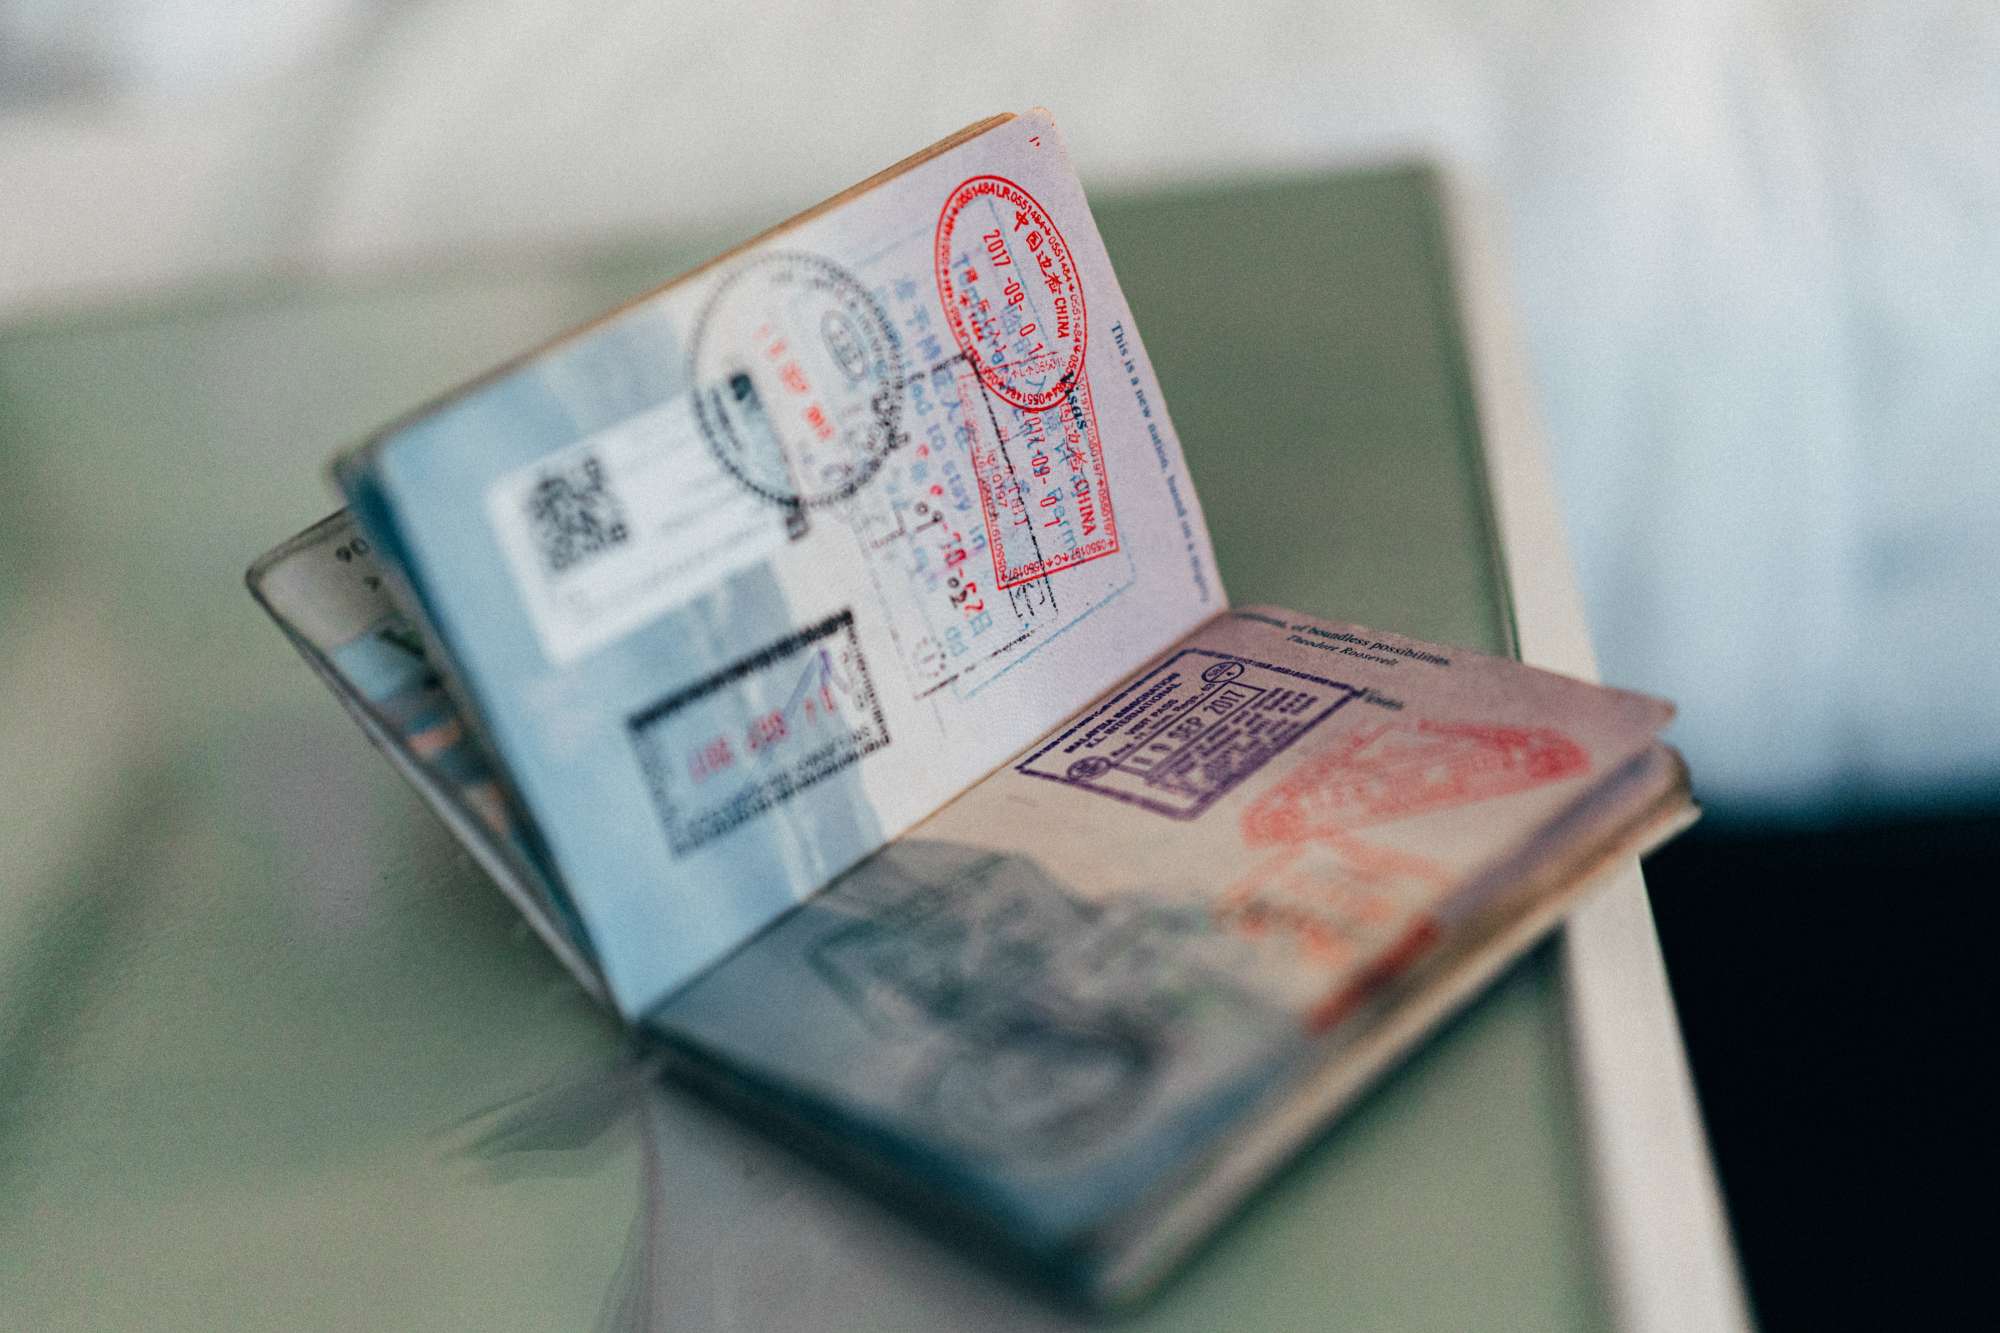 image of stamped passport